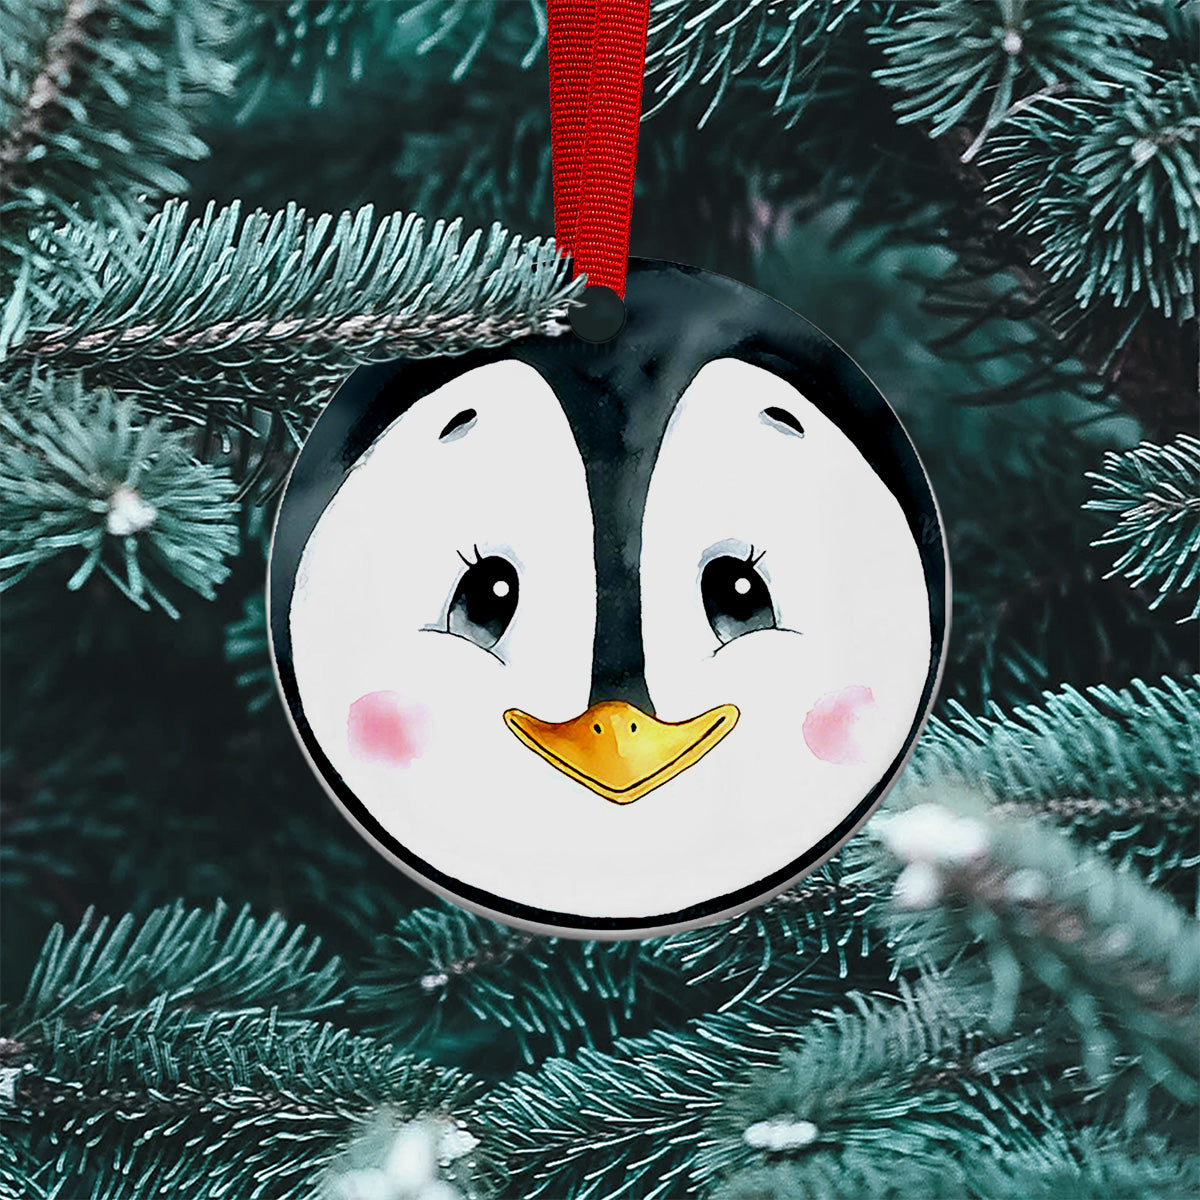 Penguin tree topper  Tree toppers, Christmas love, Christmas decor diy